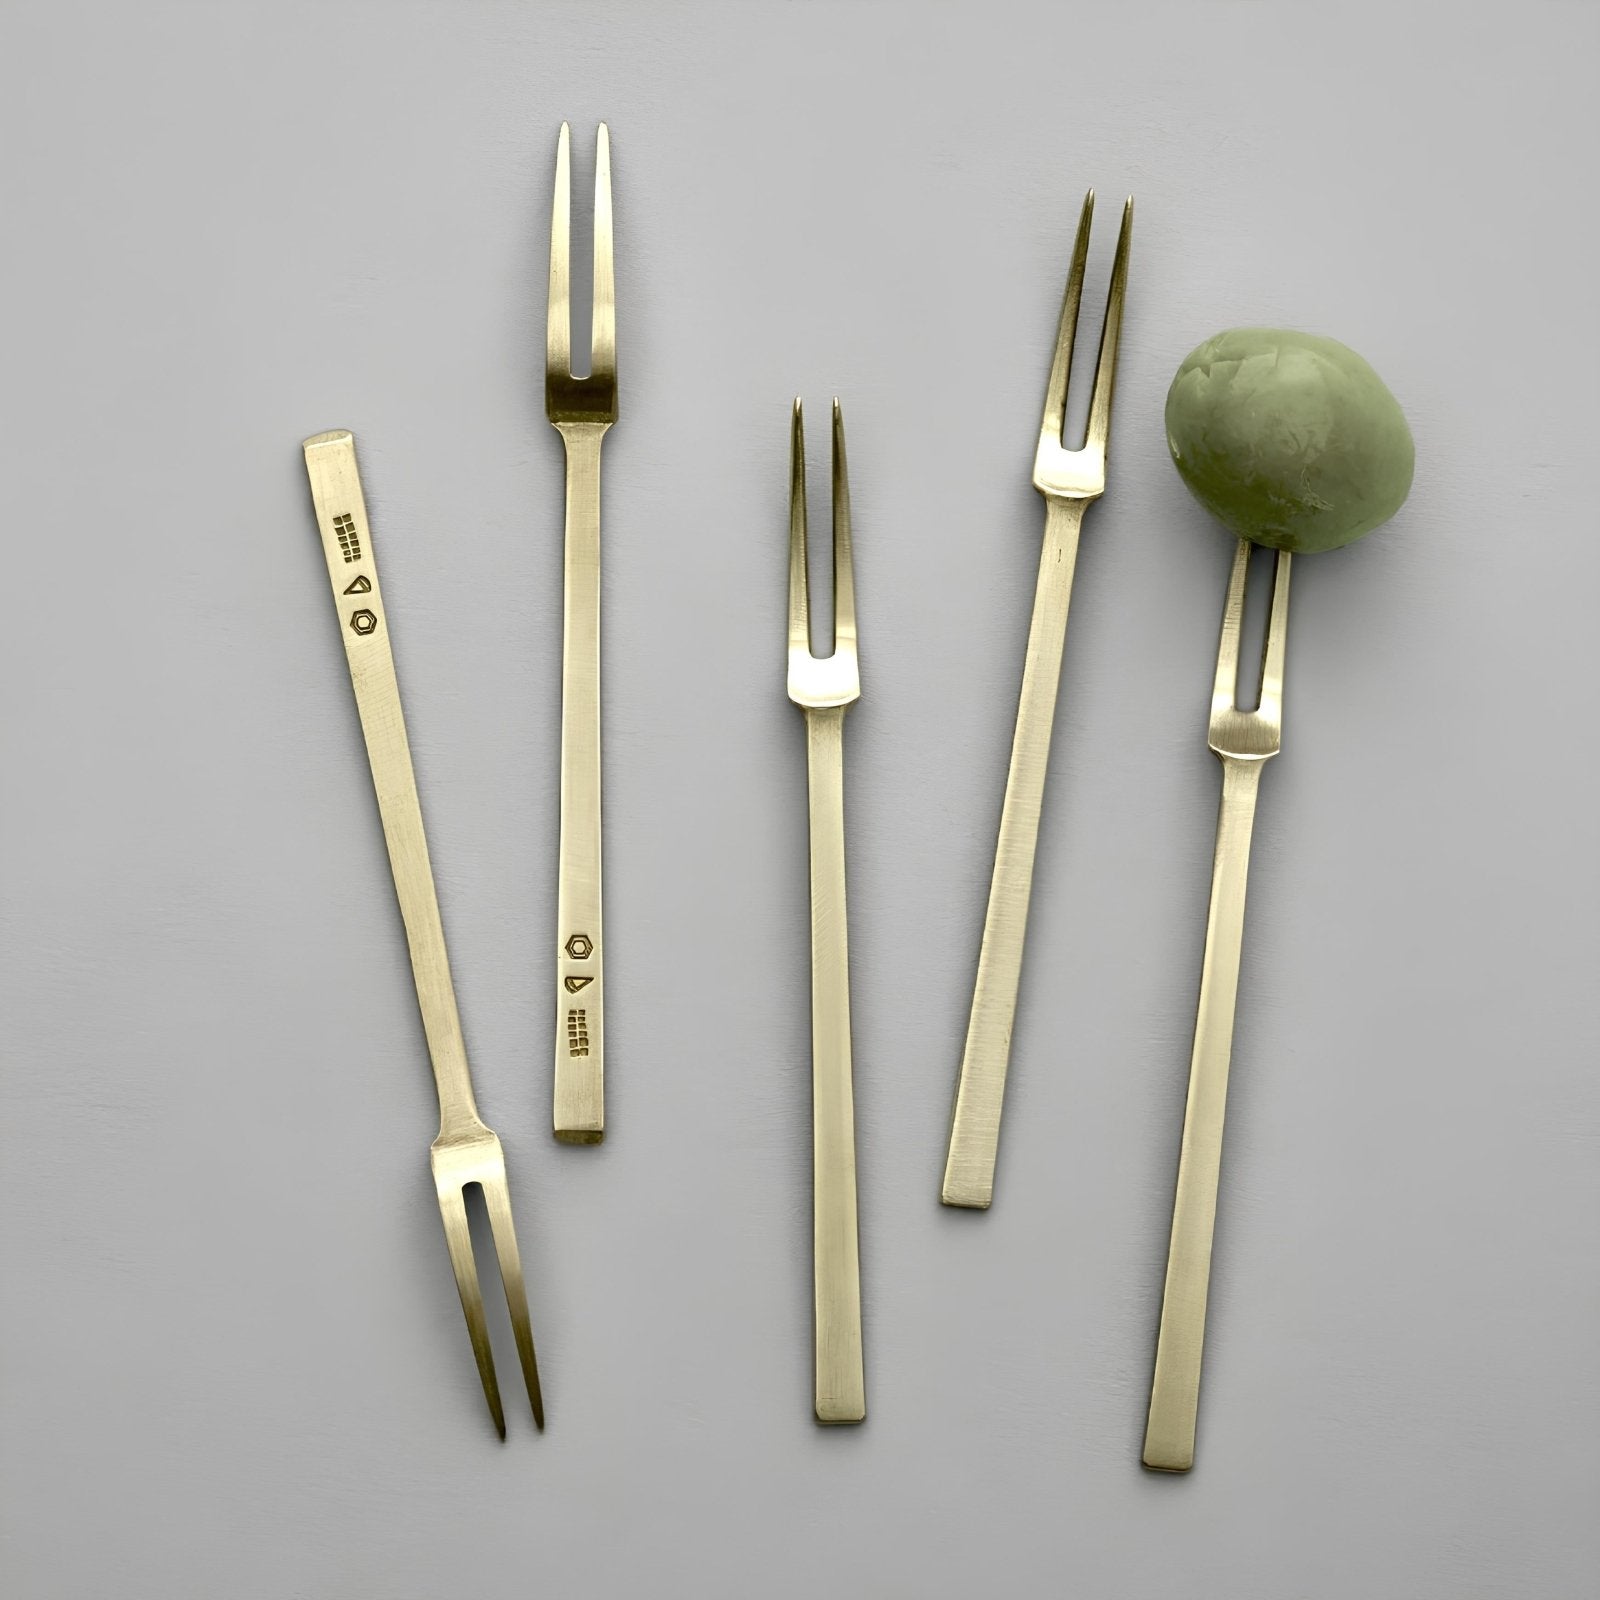 Sakami Kogei ‘Hime’ små japanske gafler i messing (5 styk)_1 by Rune-Jakobsen Design